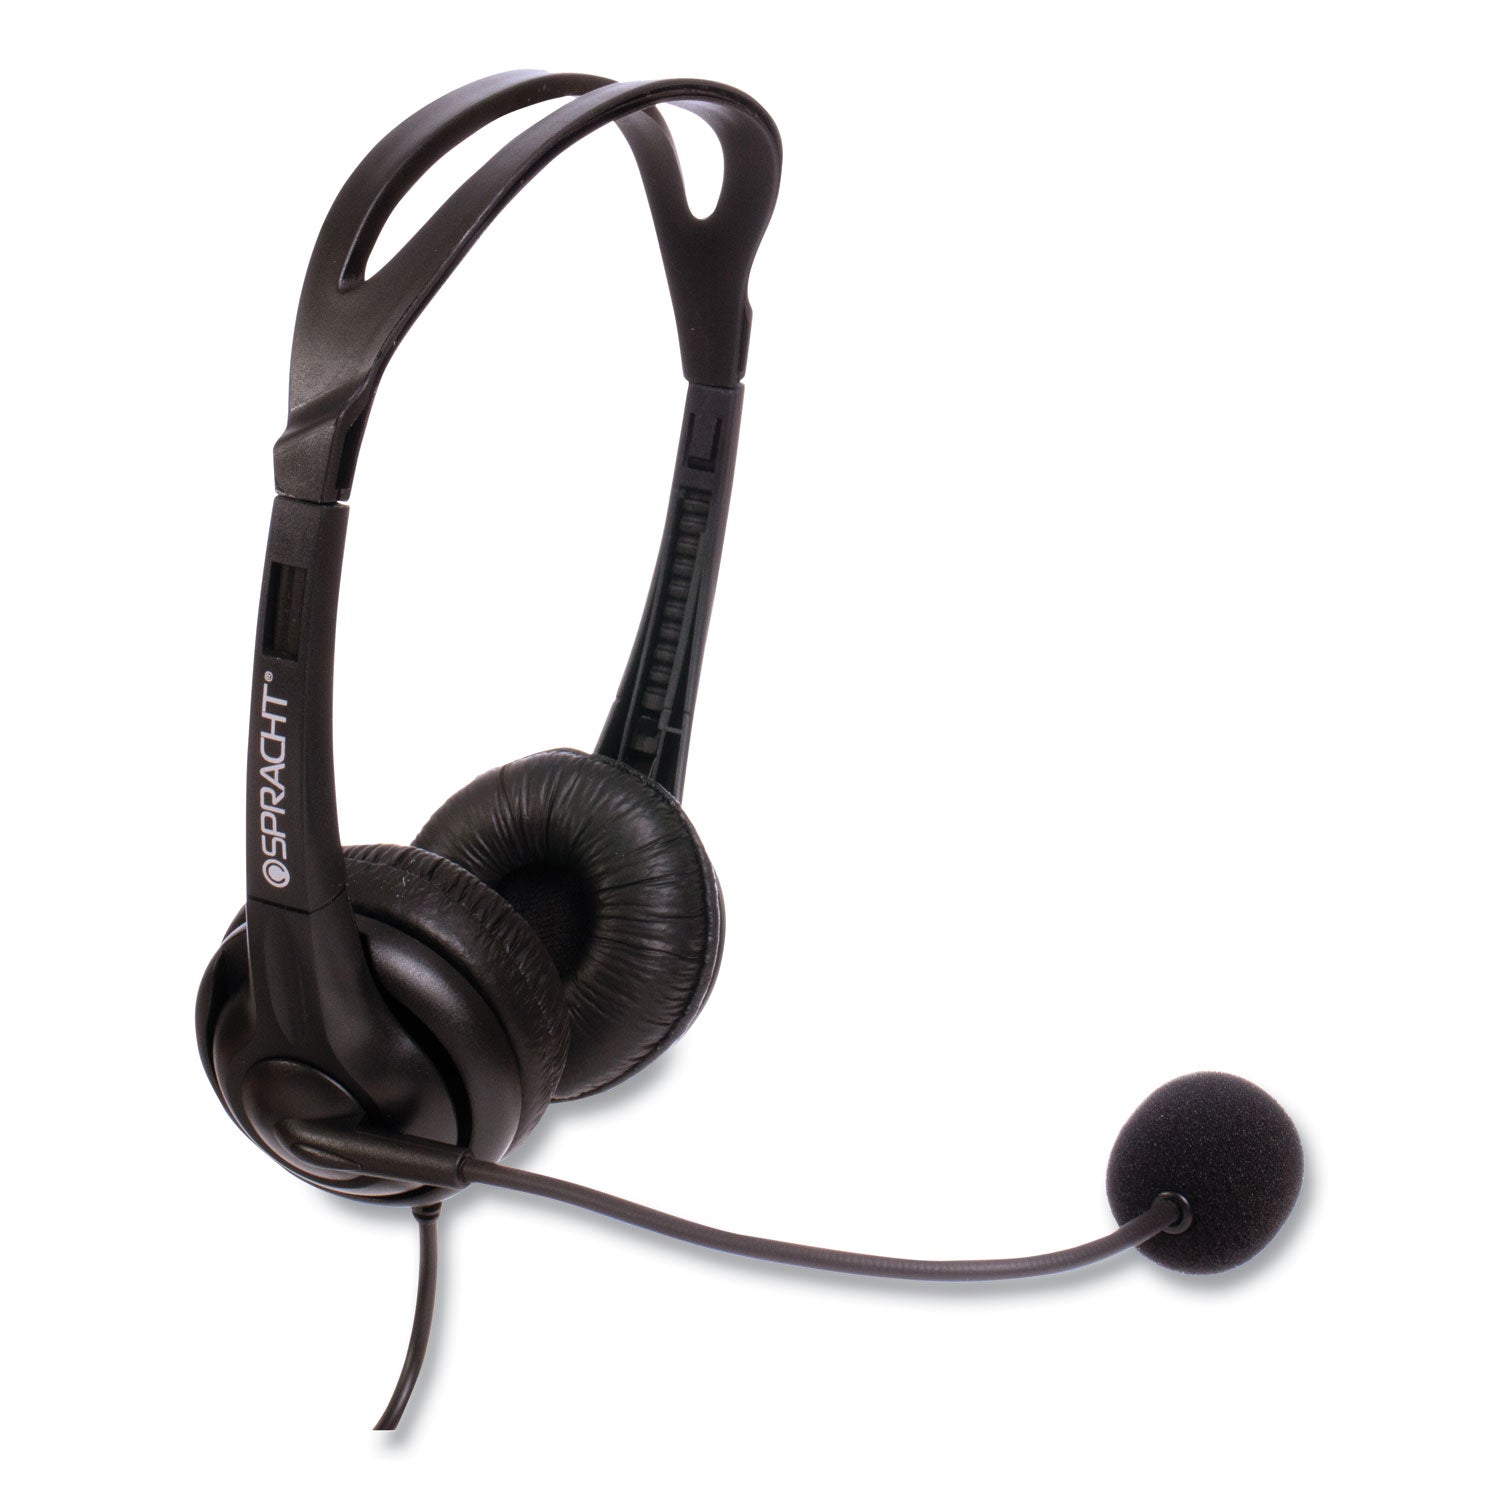 zum-zum350b-binaural-over-the-head-headset-black_sptzum350b - 4